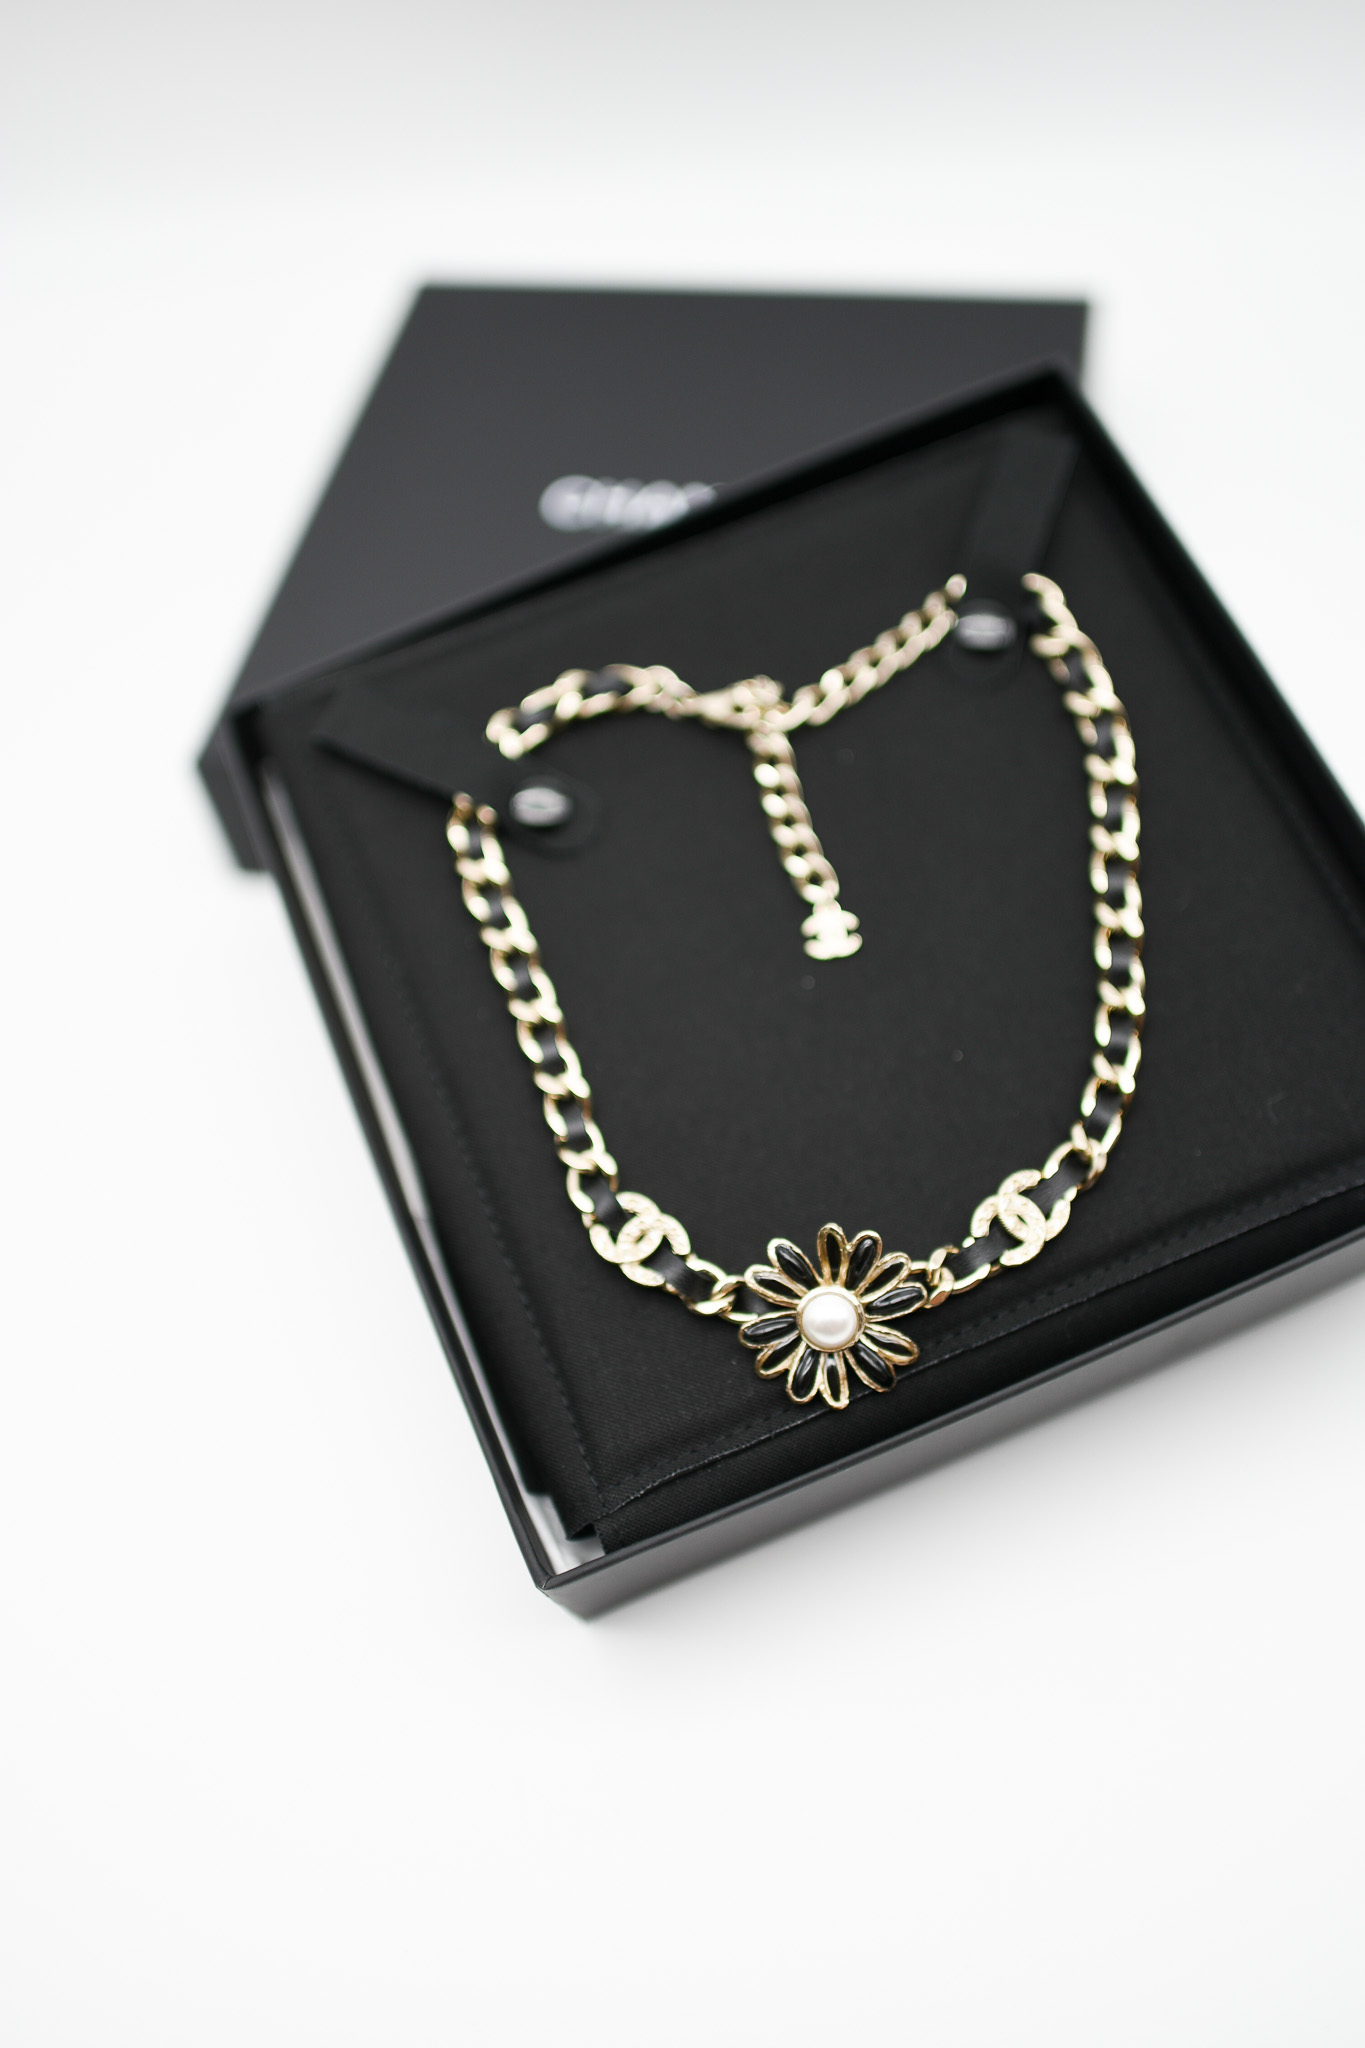 Chanel Jewelry Headband/Necklace CC Choker with Black Leather, Gold Tone,  New in Box GA001 - Julia Rose Boston